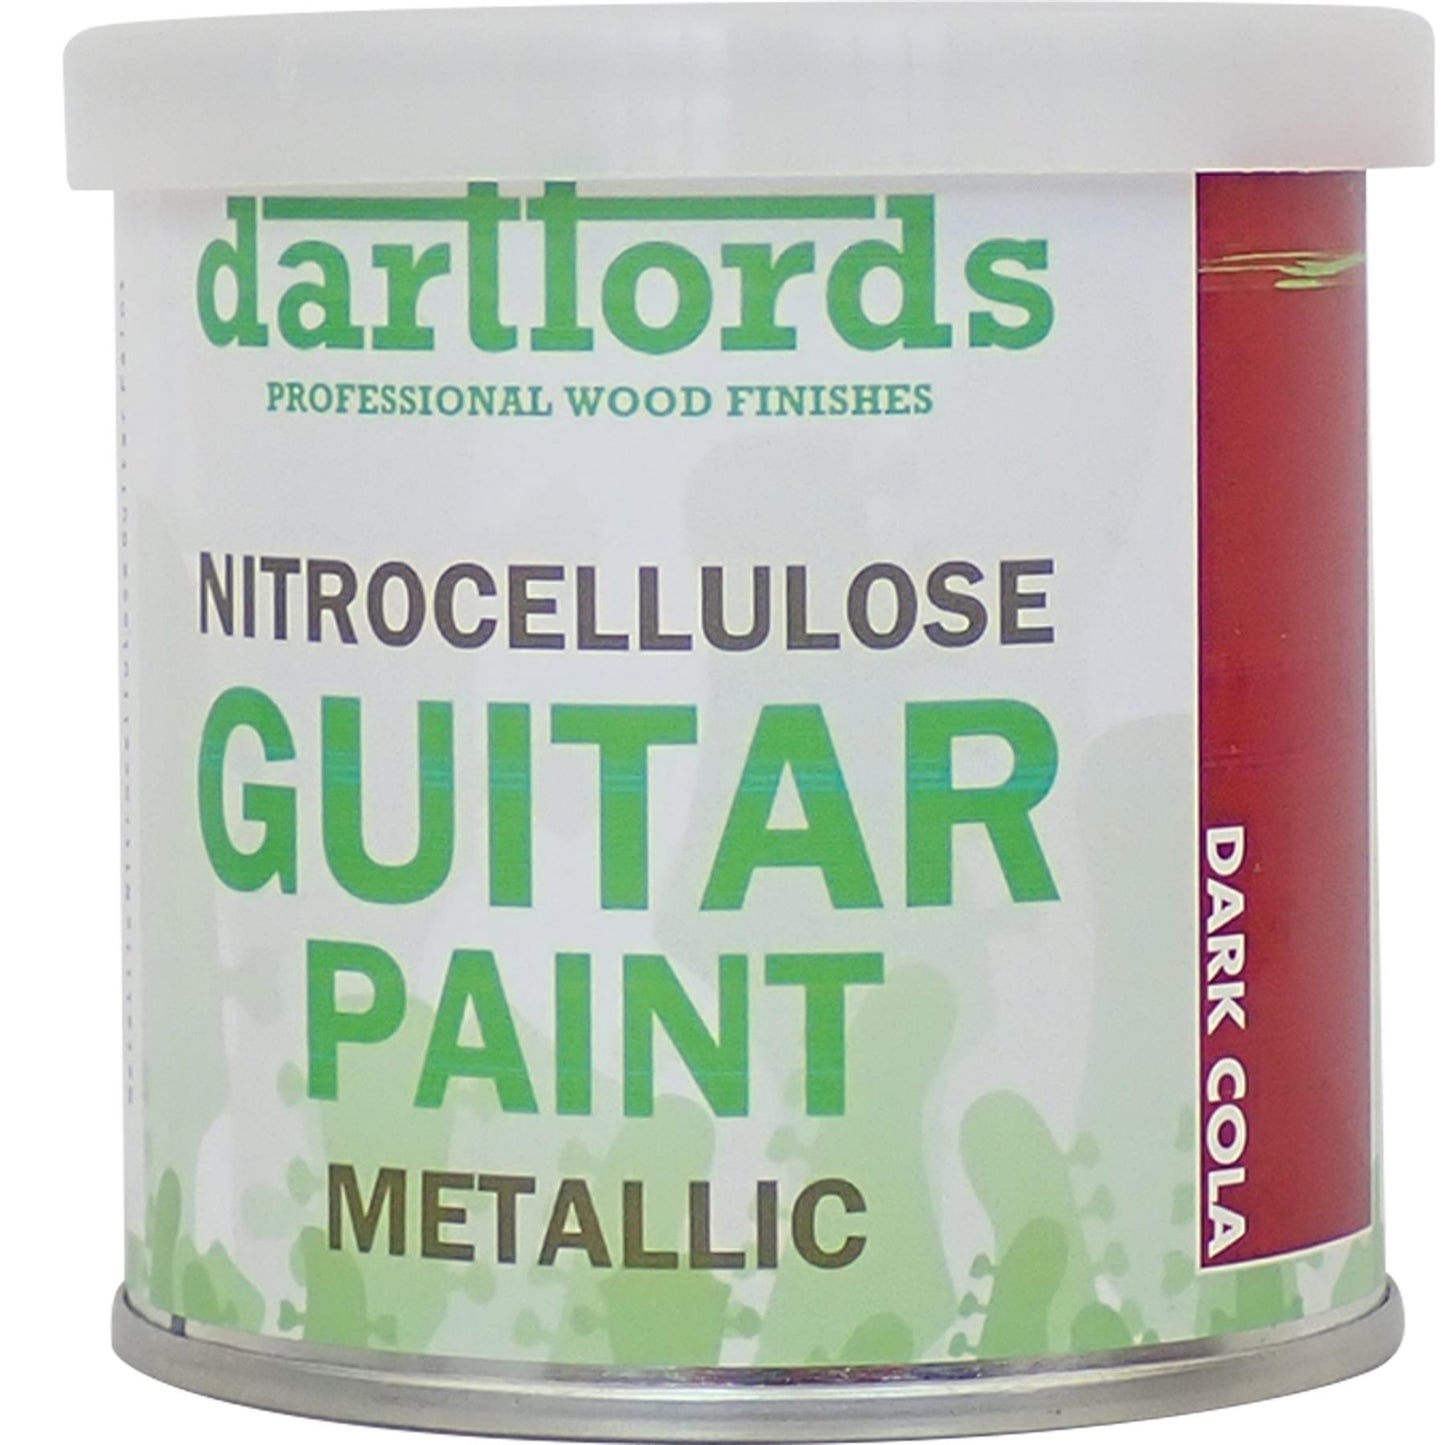 dartfords Dark Cola Metallic Nitrocellulose Guitar Paint - 230ml Tin